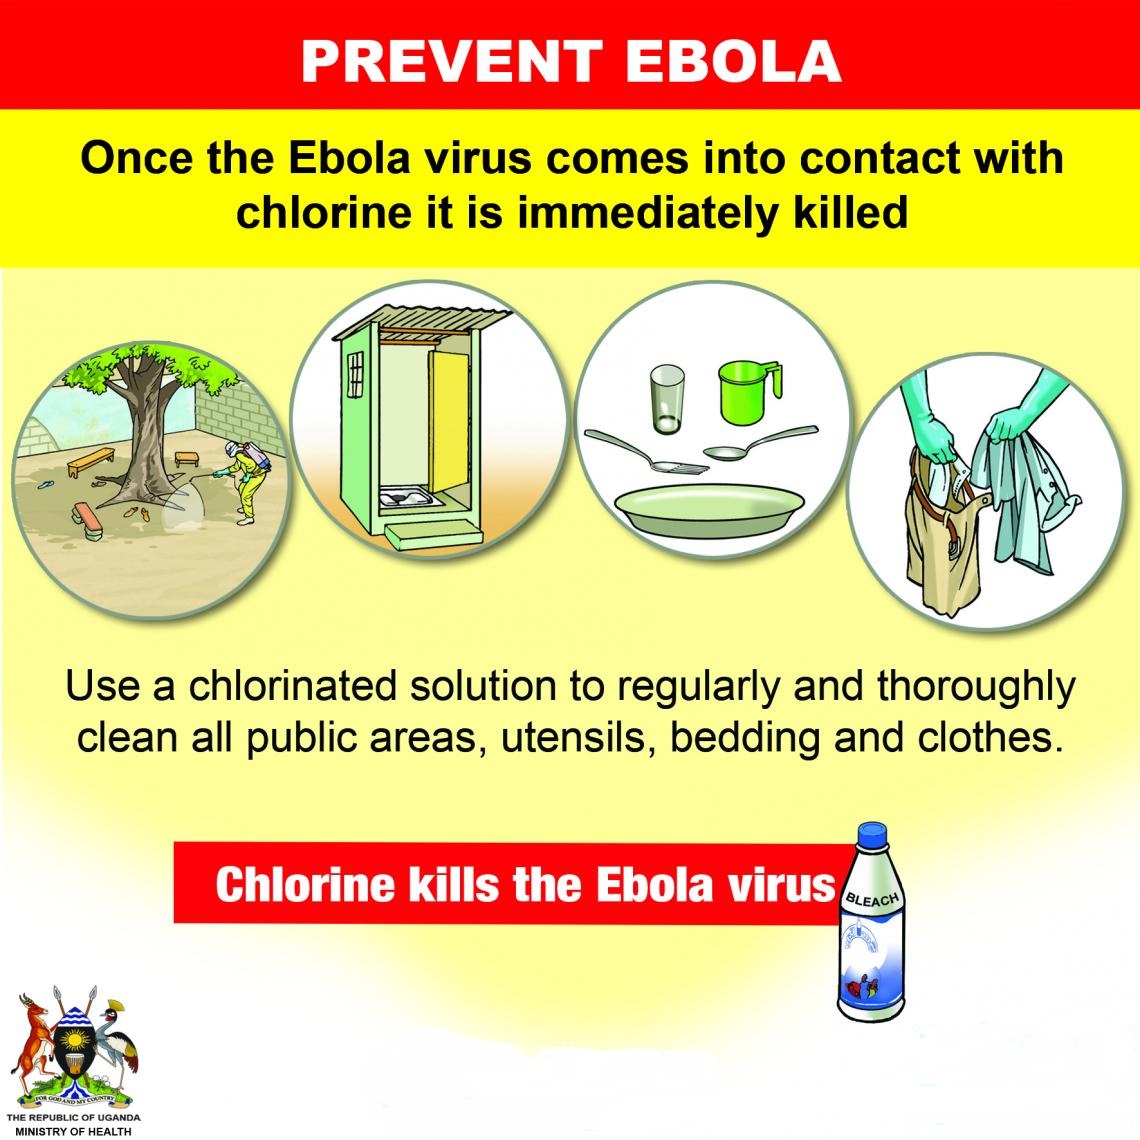 Prevention of Ebola